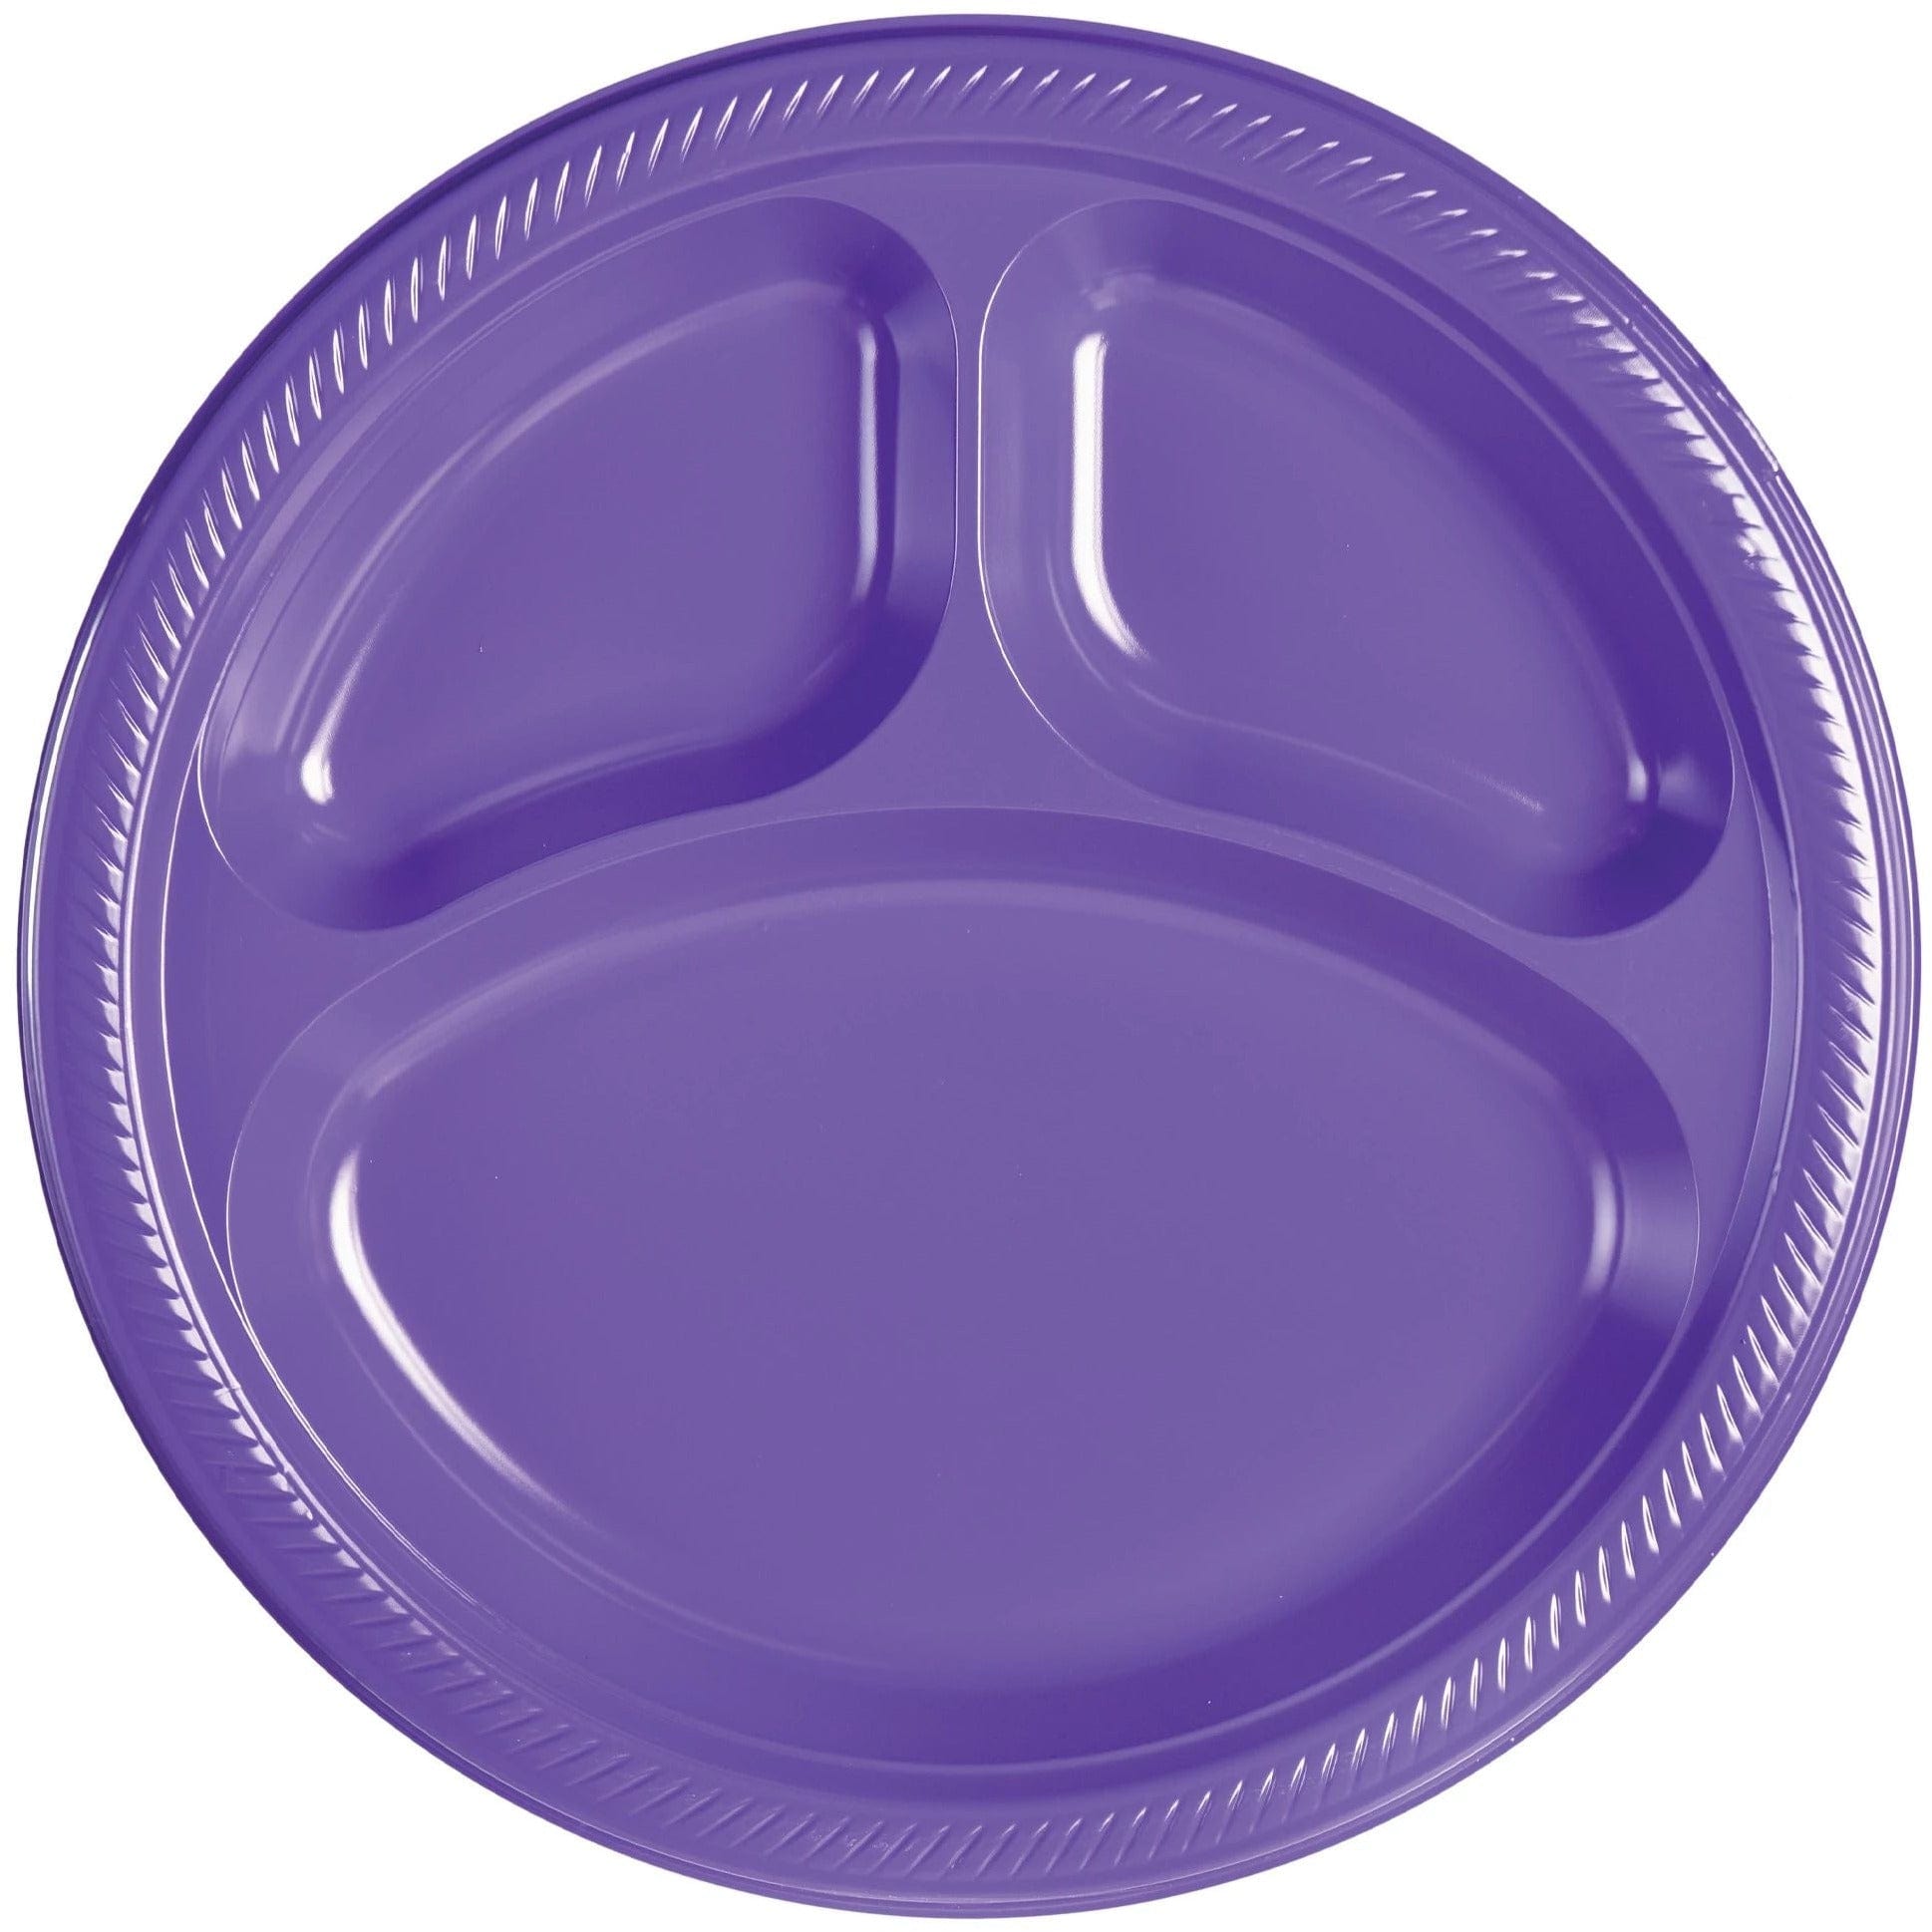 Amscan BASIC New Purple Compartment Plastic Plates